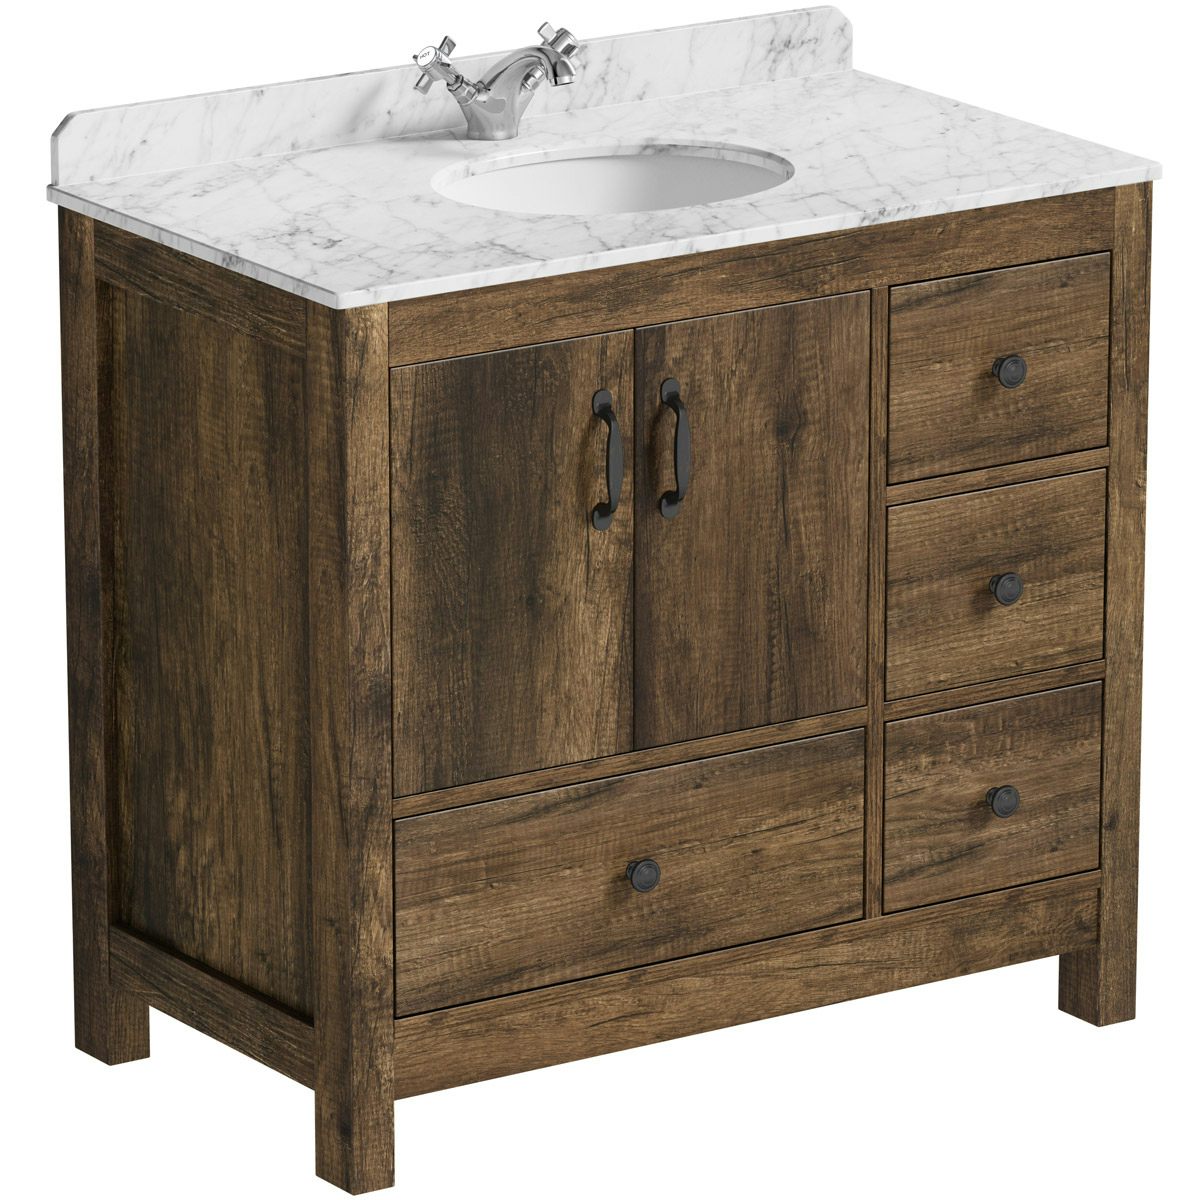 White Marble Basin 900mm, Wood Sink Vanity Unit